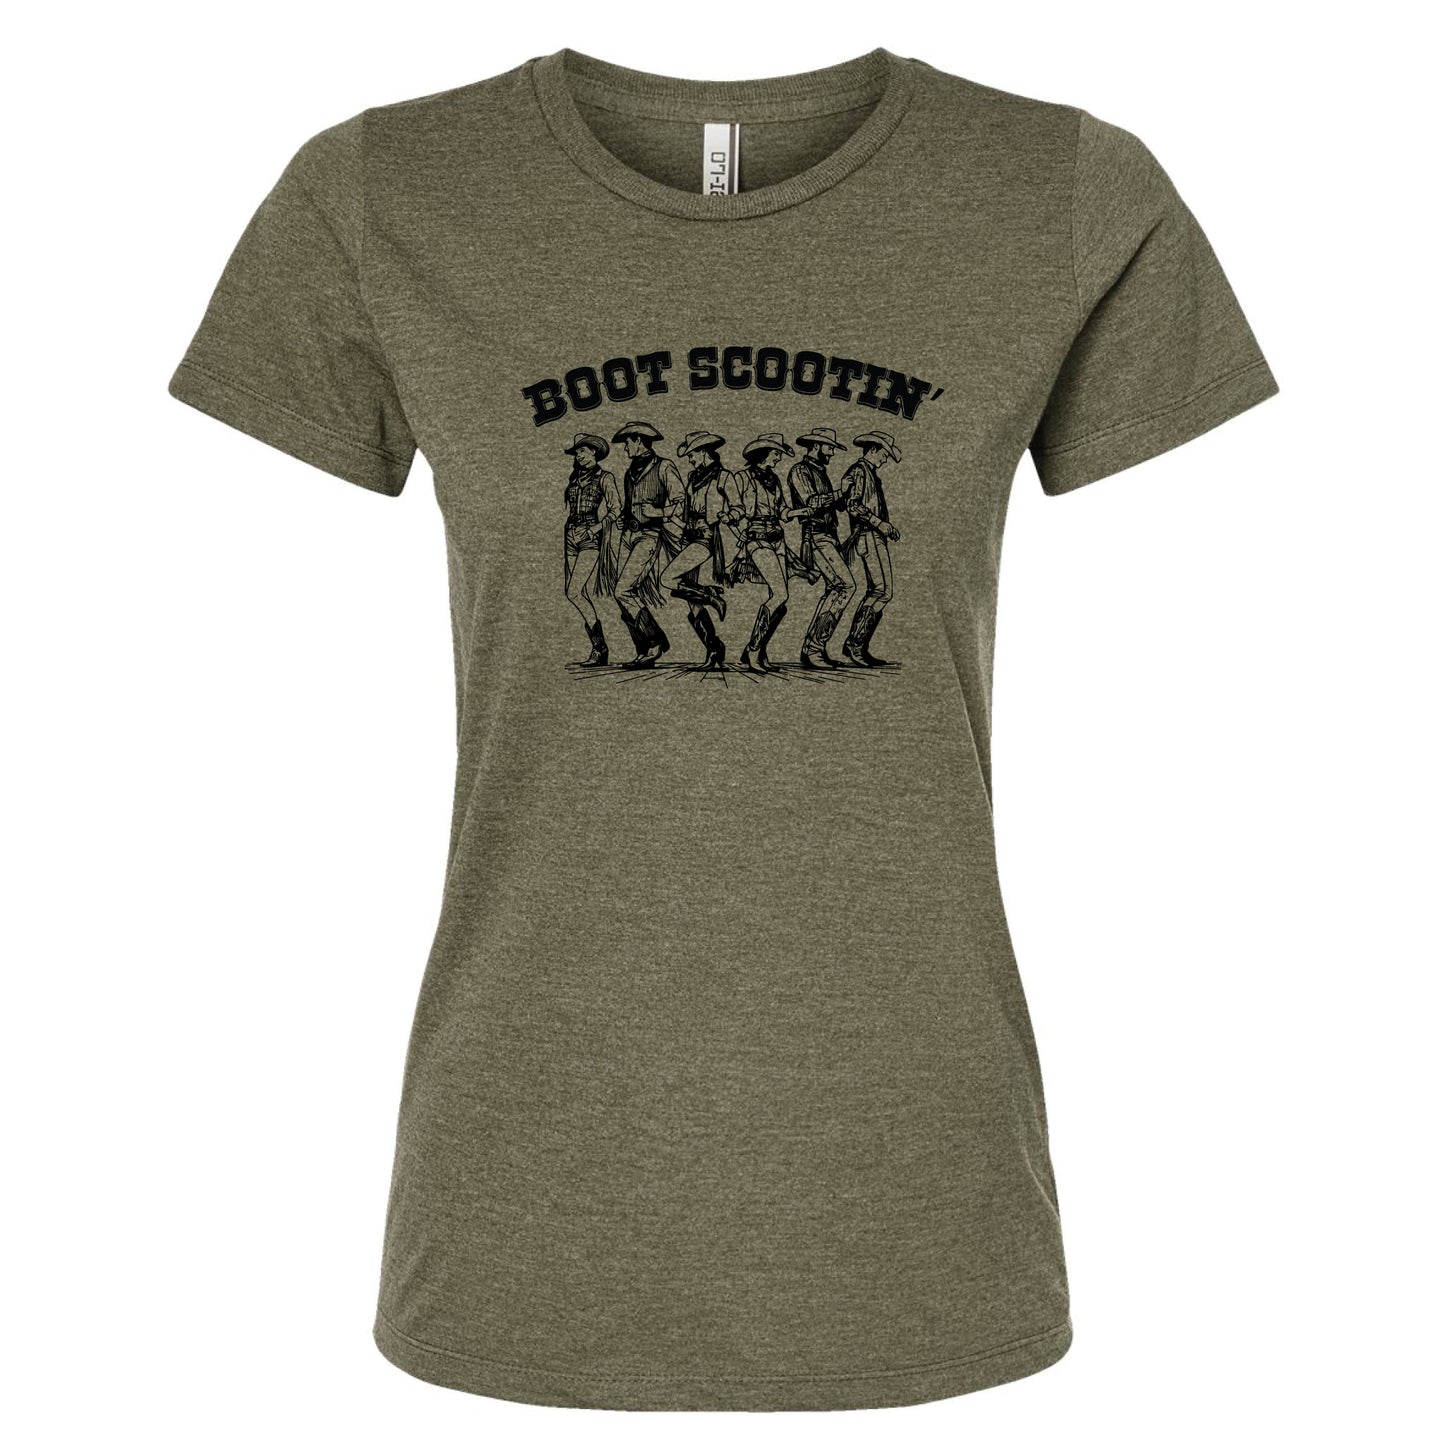 Boot Scootin' Boogie Women's Slim Fit T-Shirt